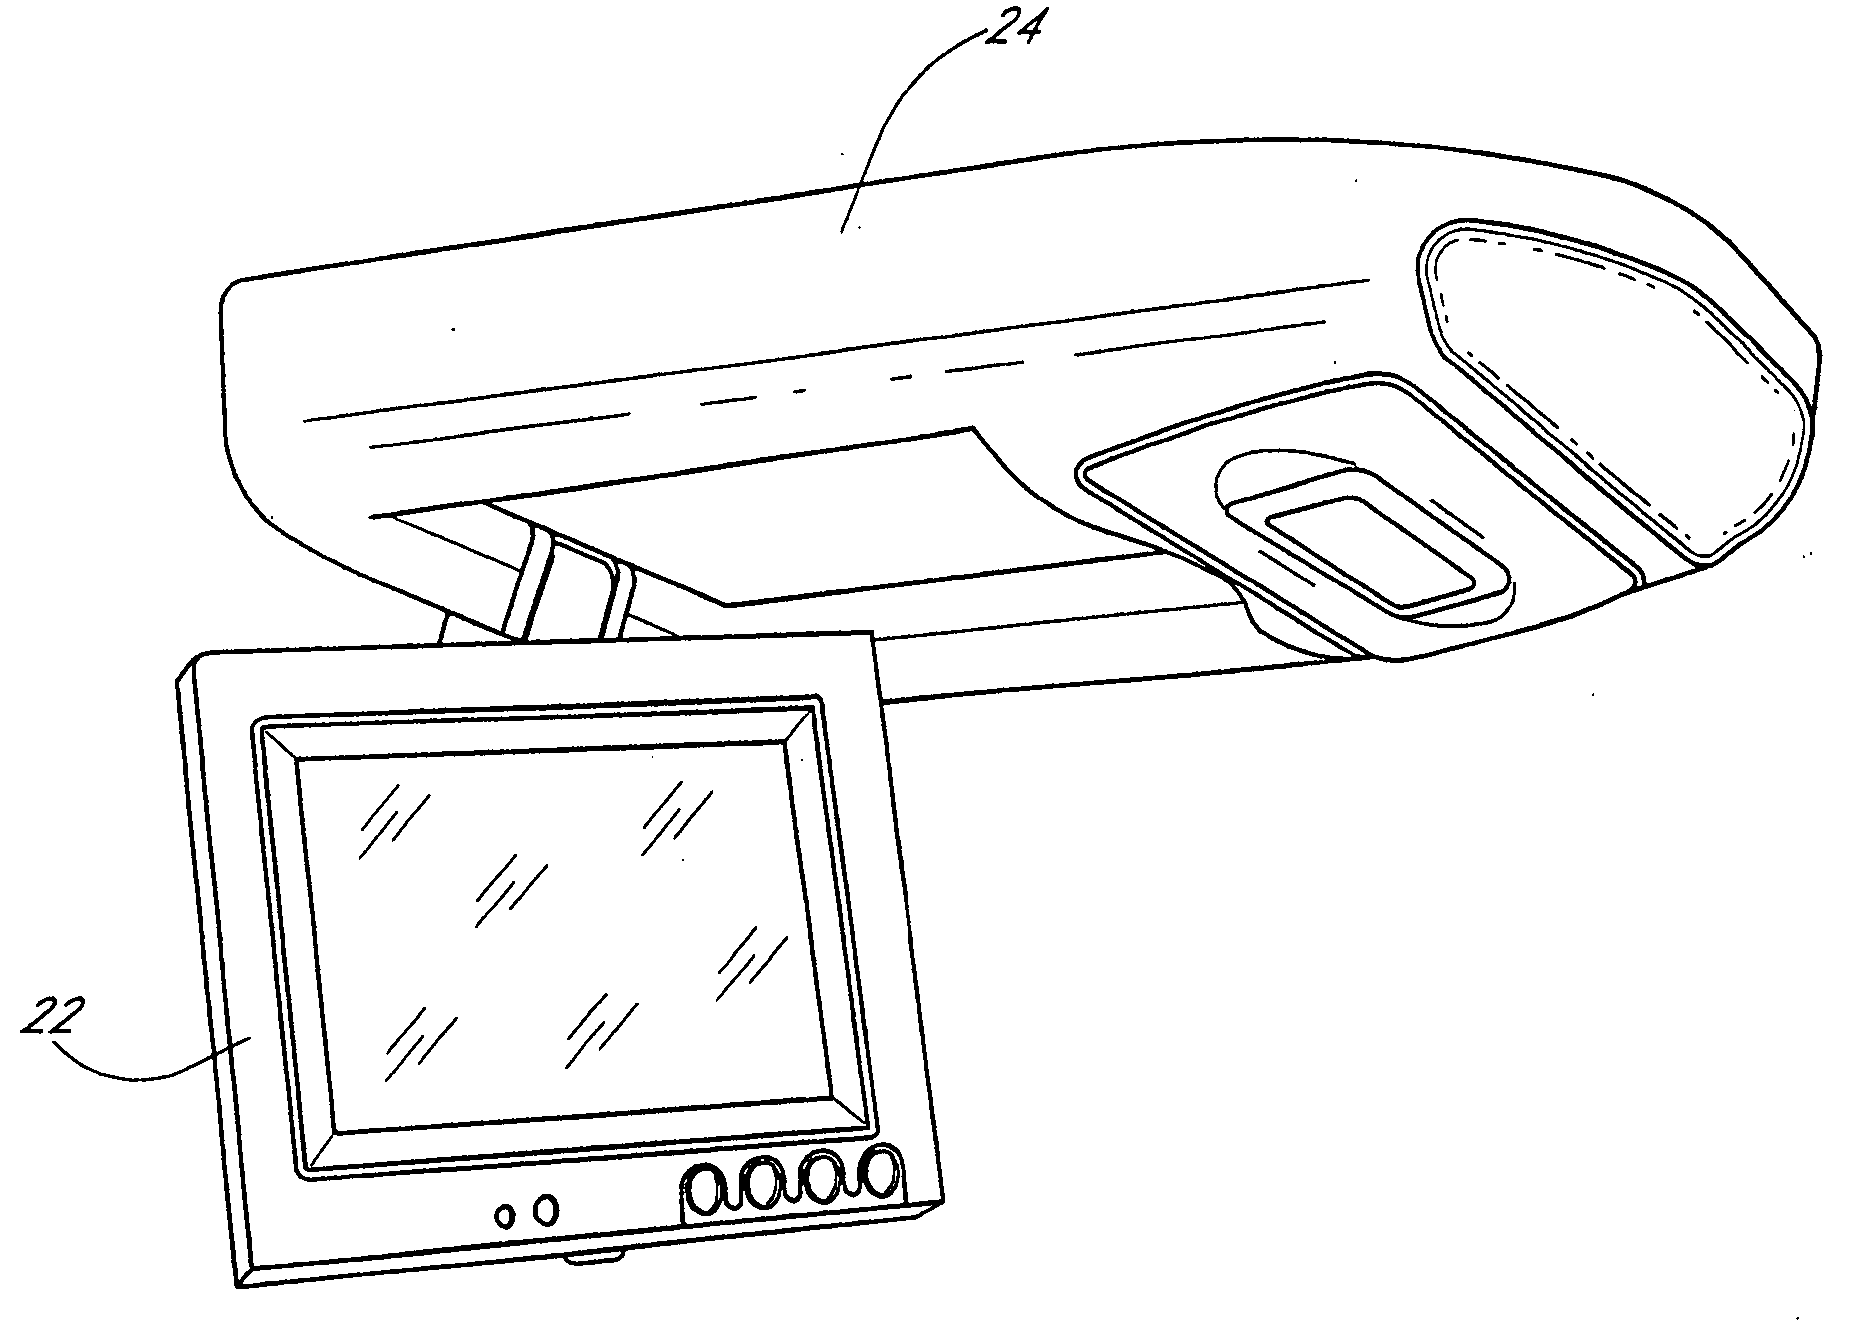 Flat thin screen TV/monitor automotive roof mount